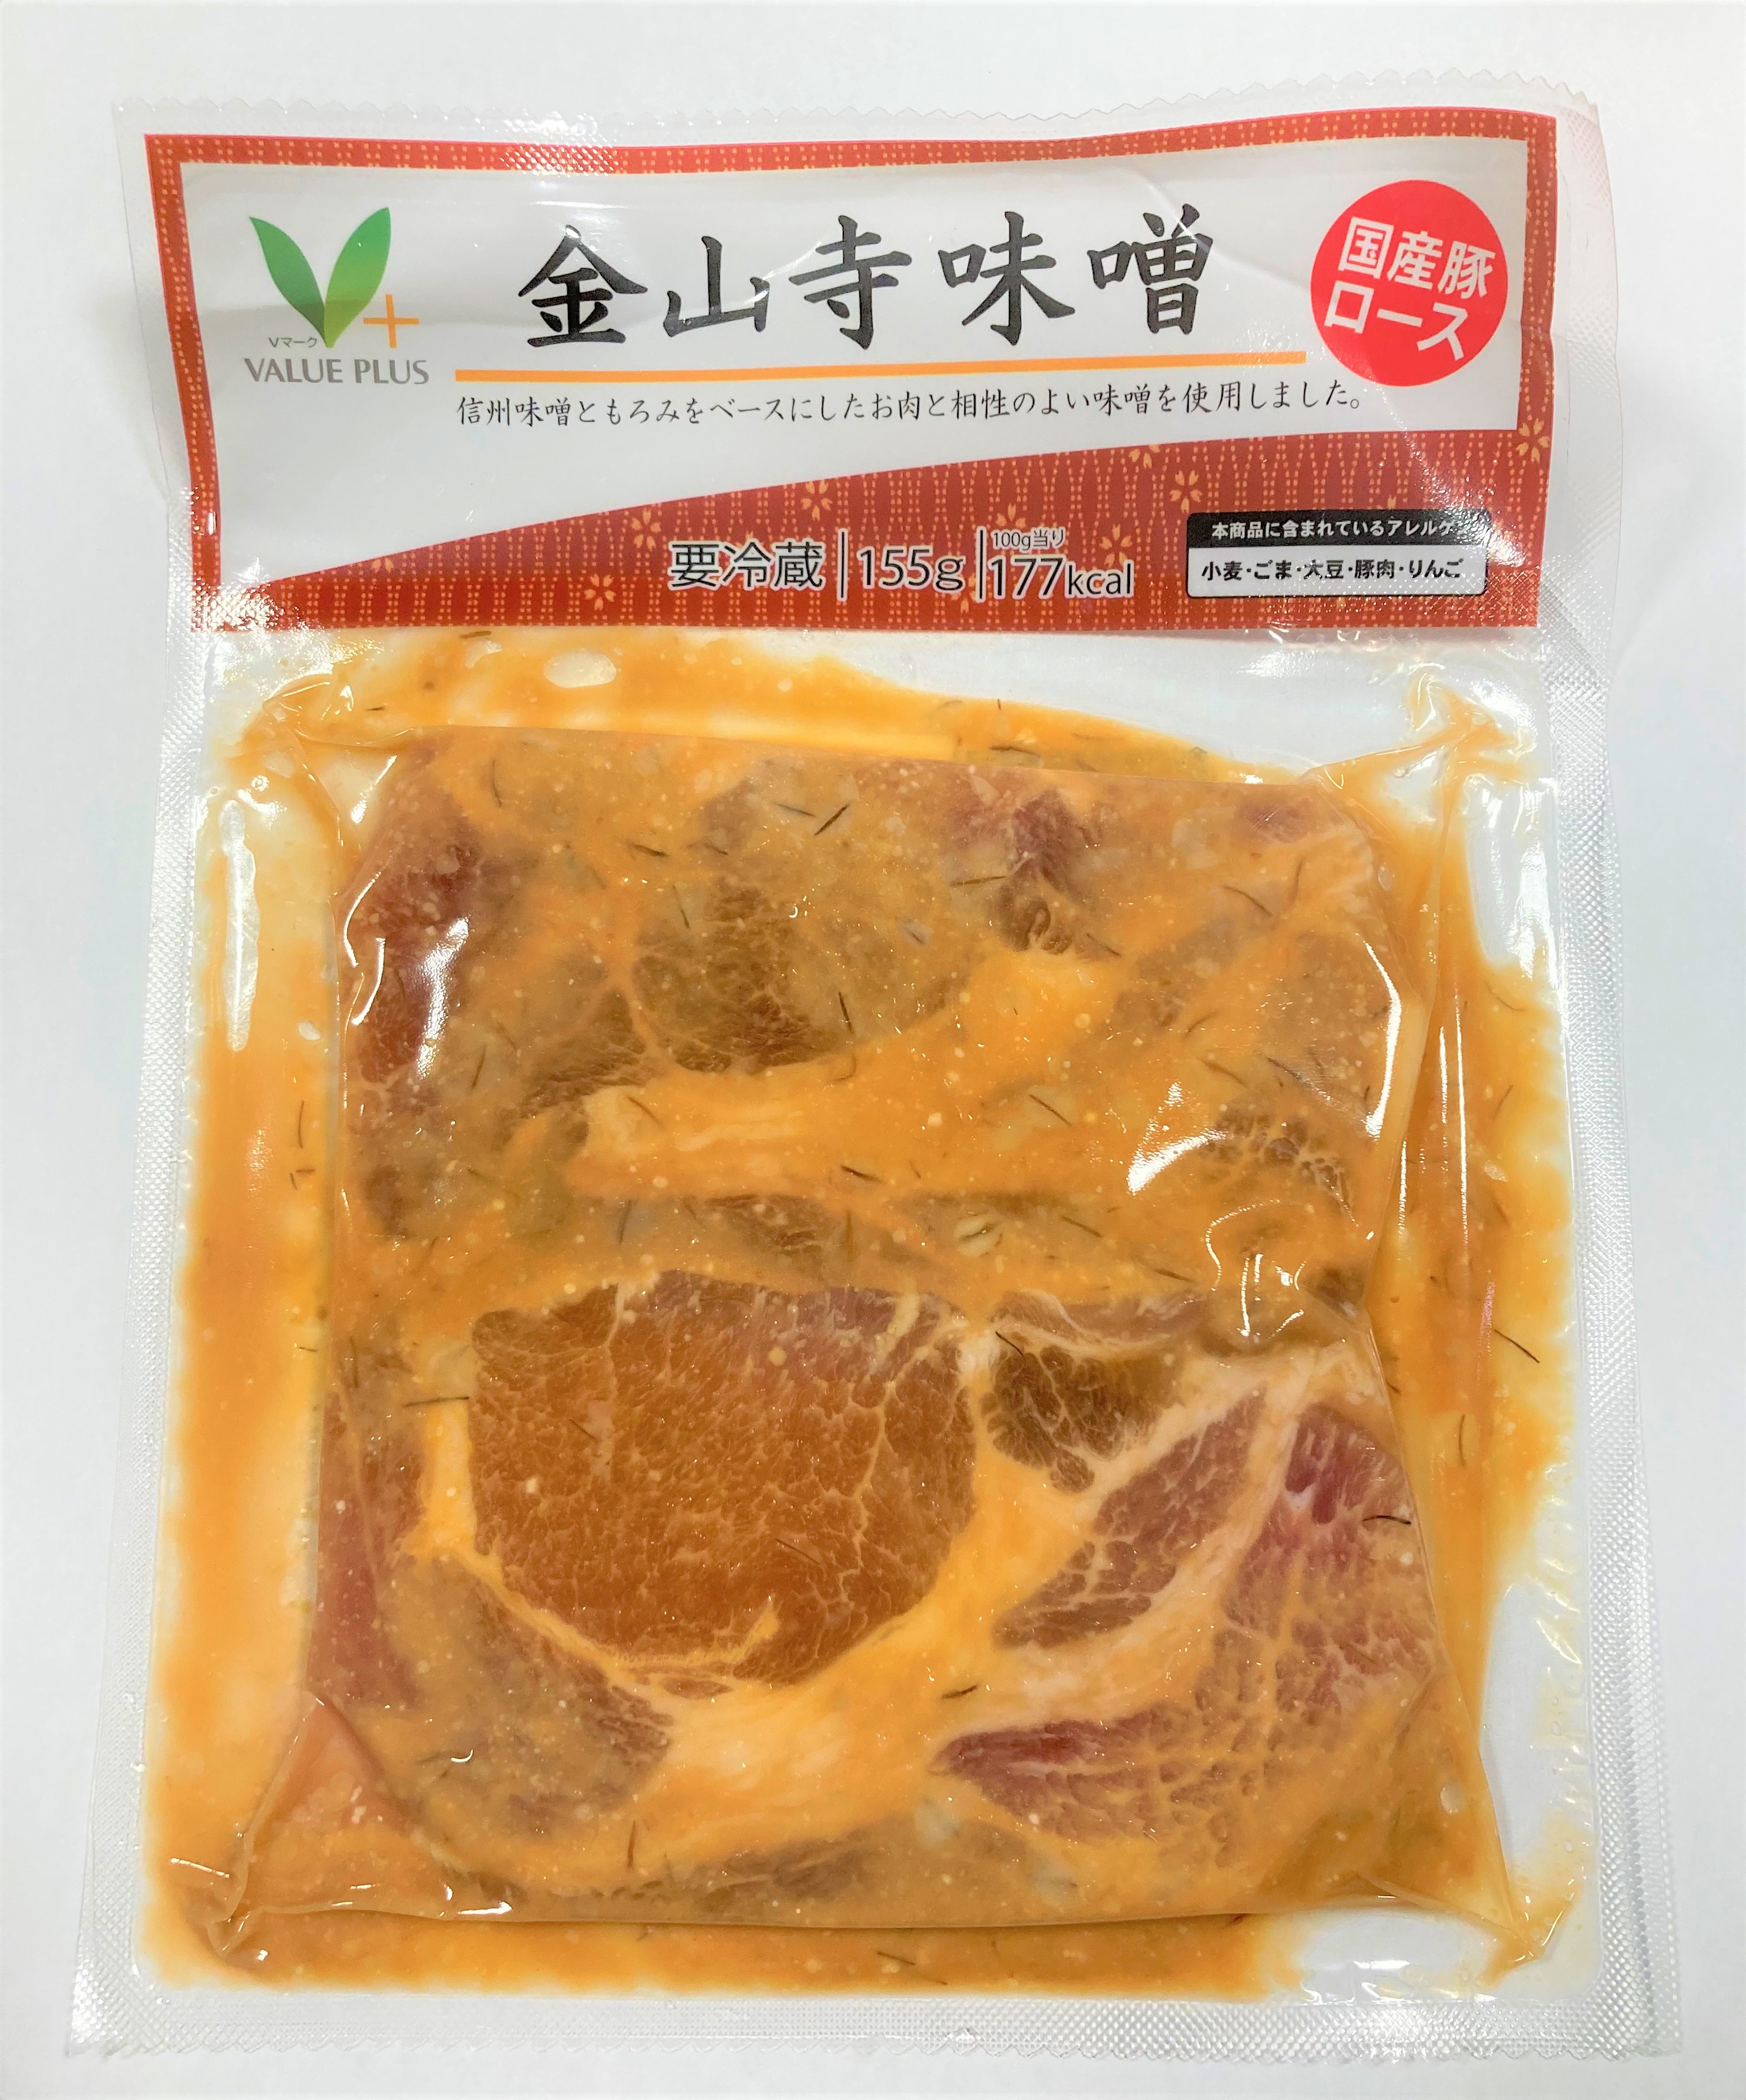 Ｖマーク金山寺味噌(国産豚ロース肉) 1パック